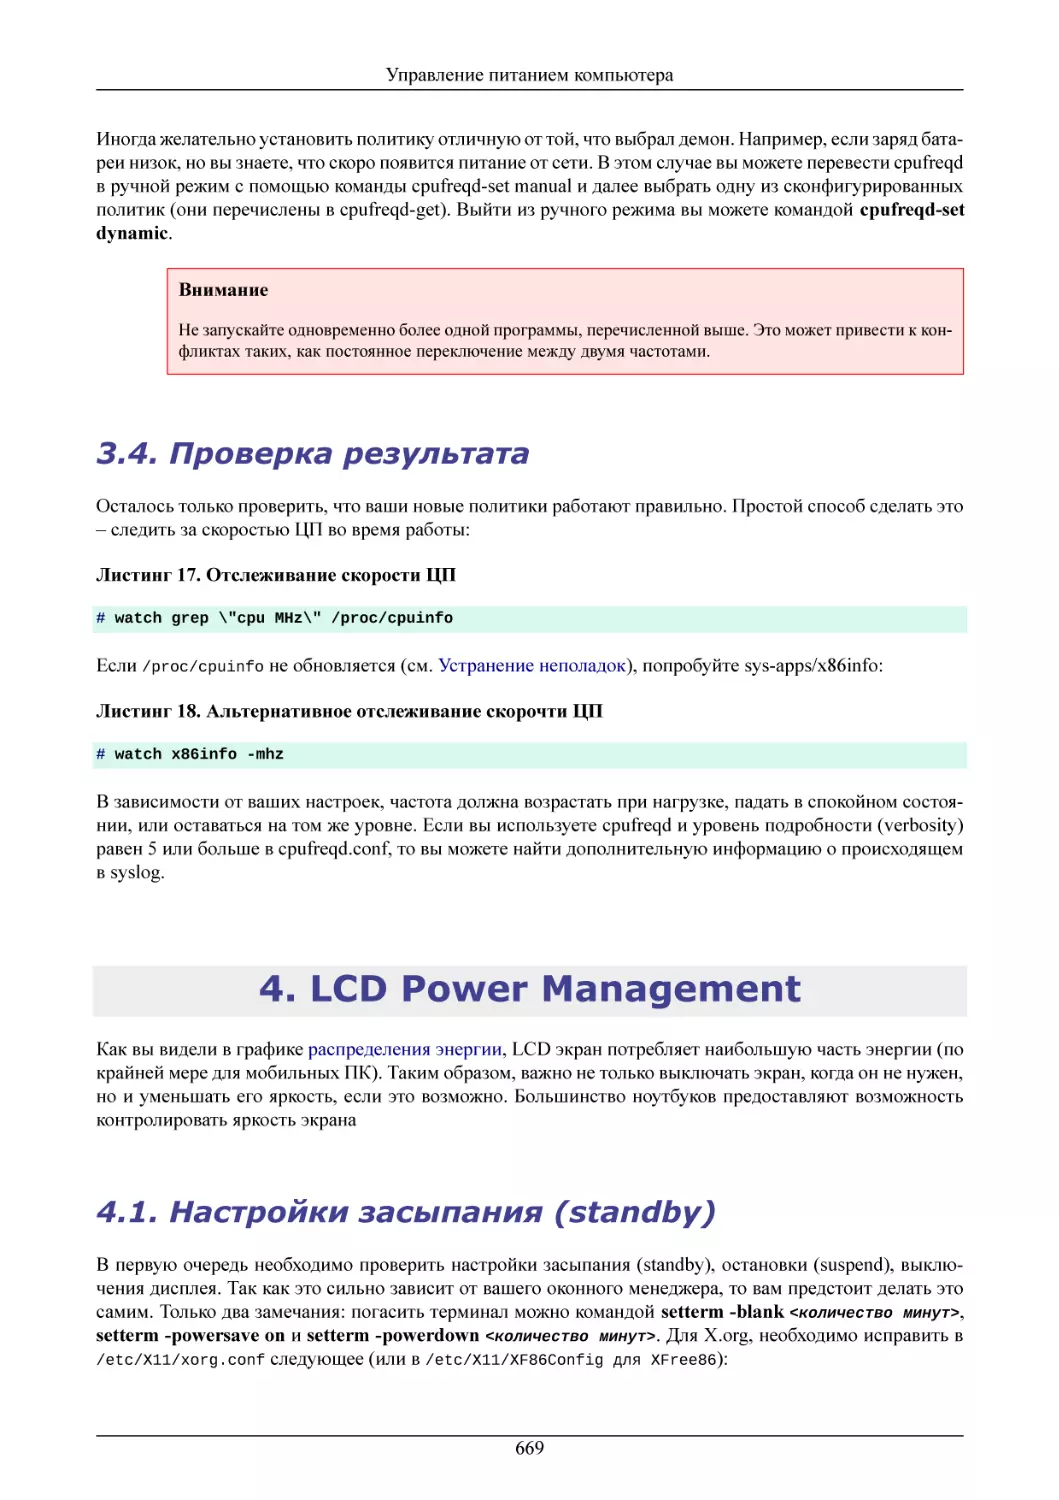 Проверка результата
LCD Power Management
Настройки засыпания (standby)